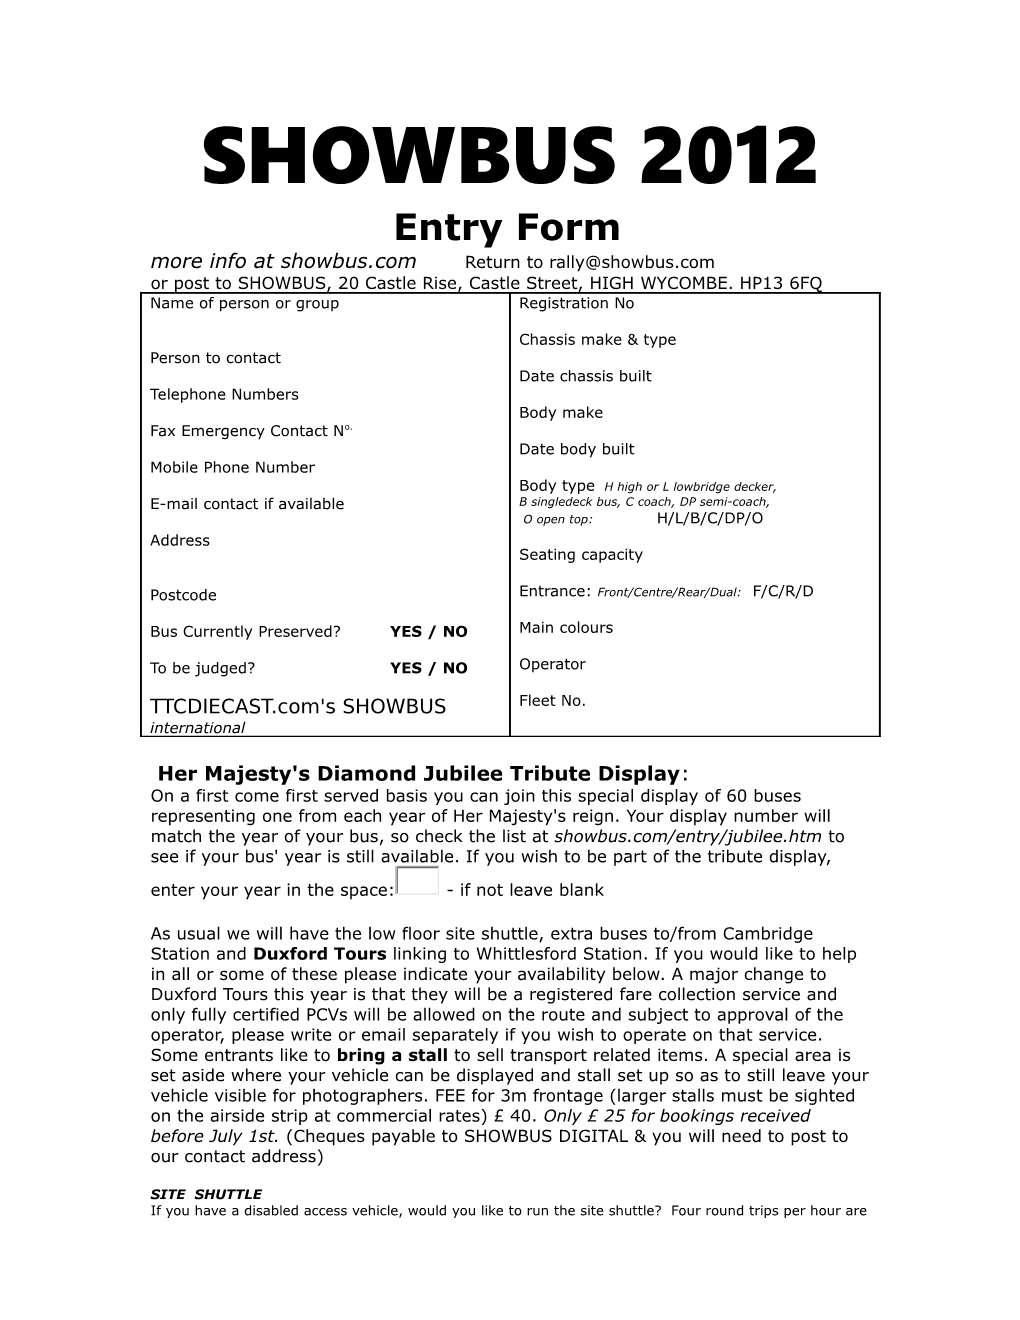 SHOWBUS 2012 Entry Form